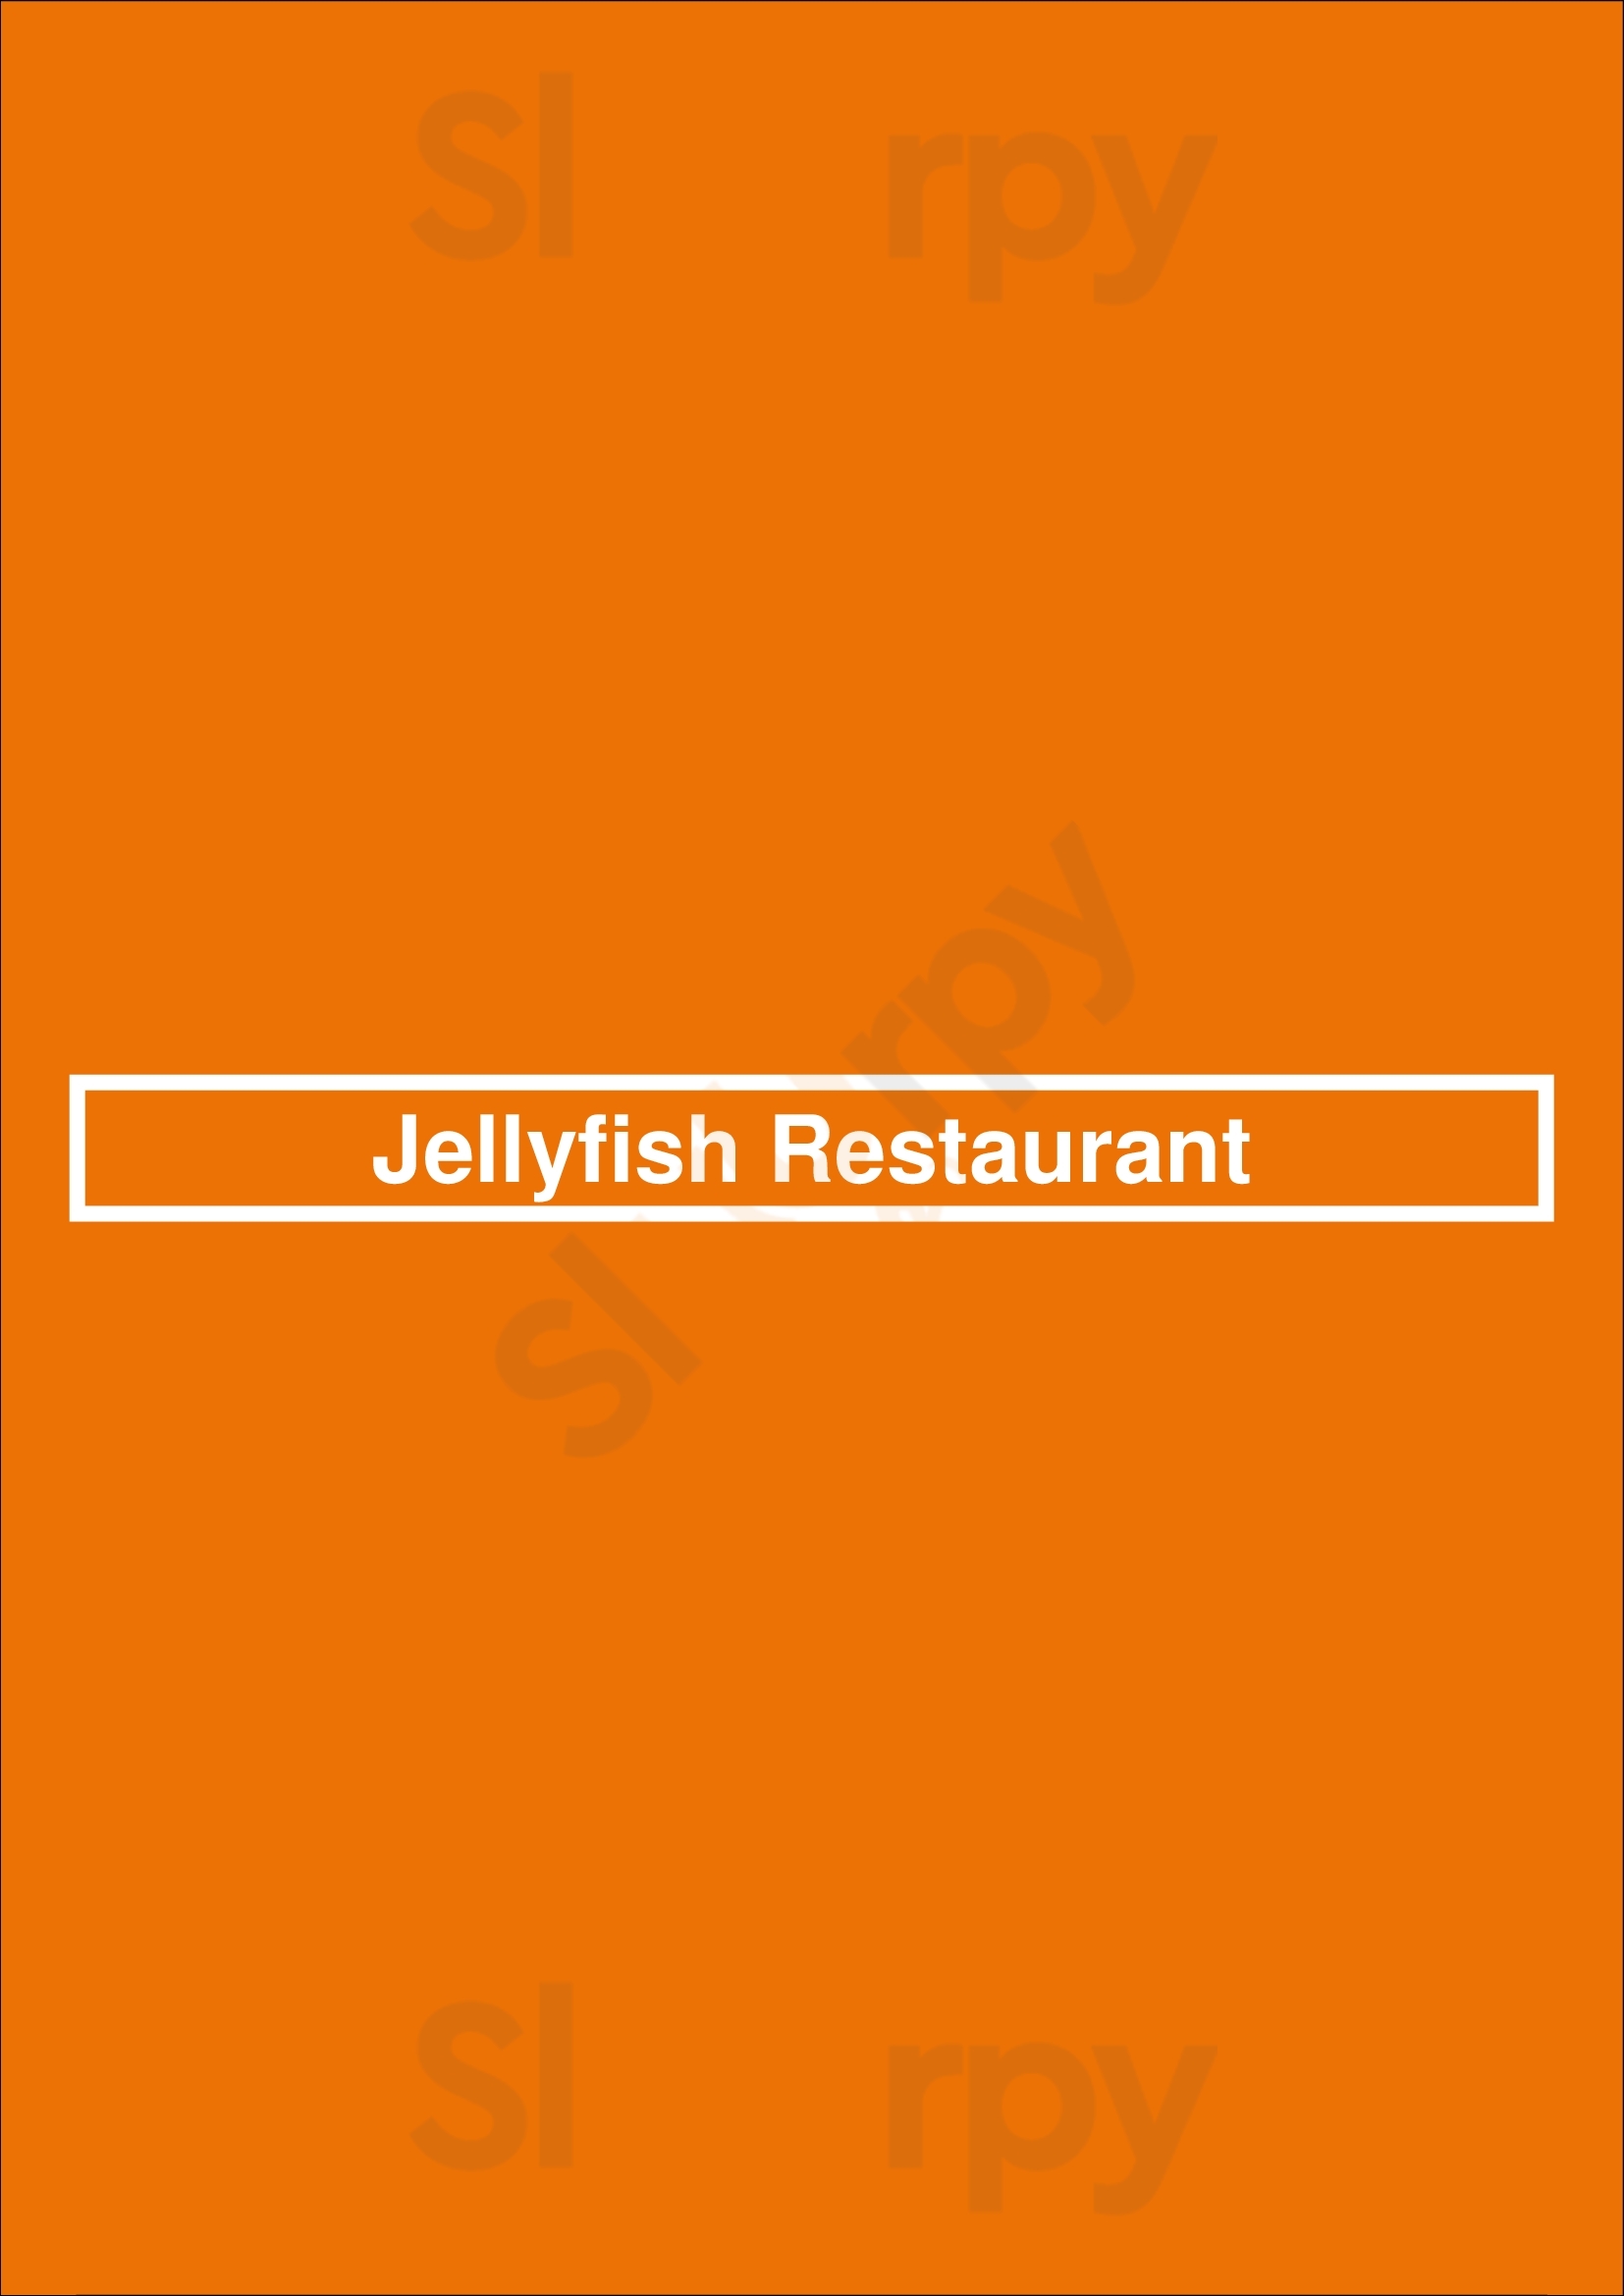 Jellyfish Restaurant Brisbane Menu - 1